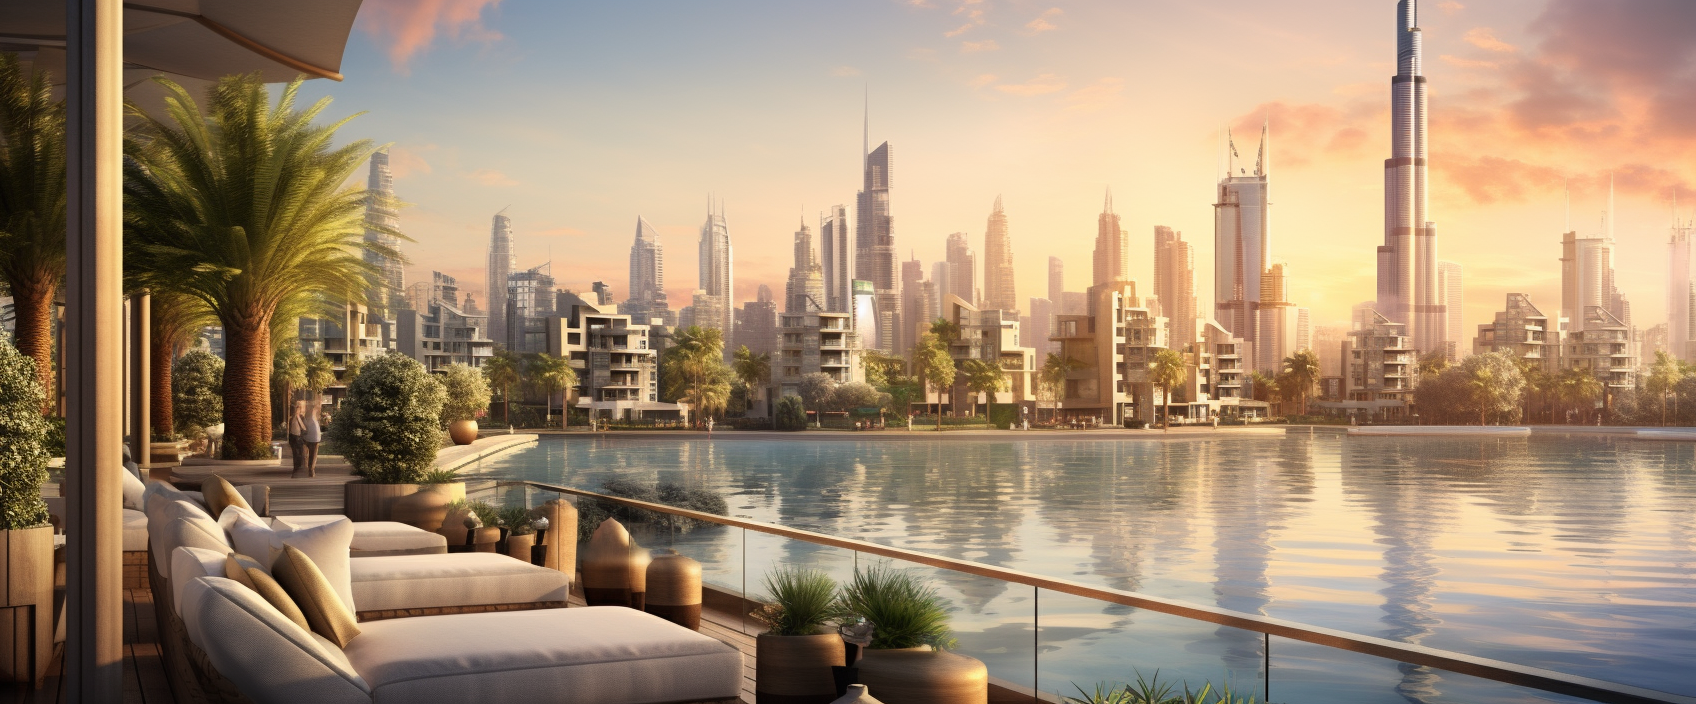 Mansions to Apartments: Dubai's Property Market